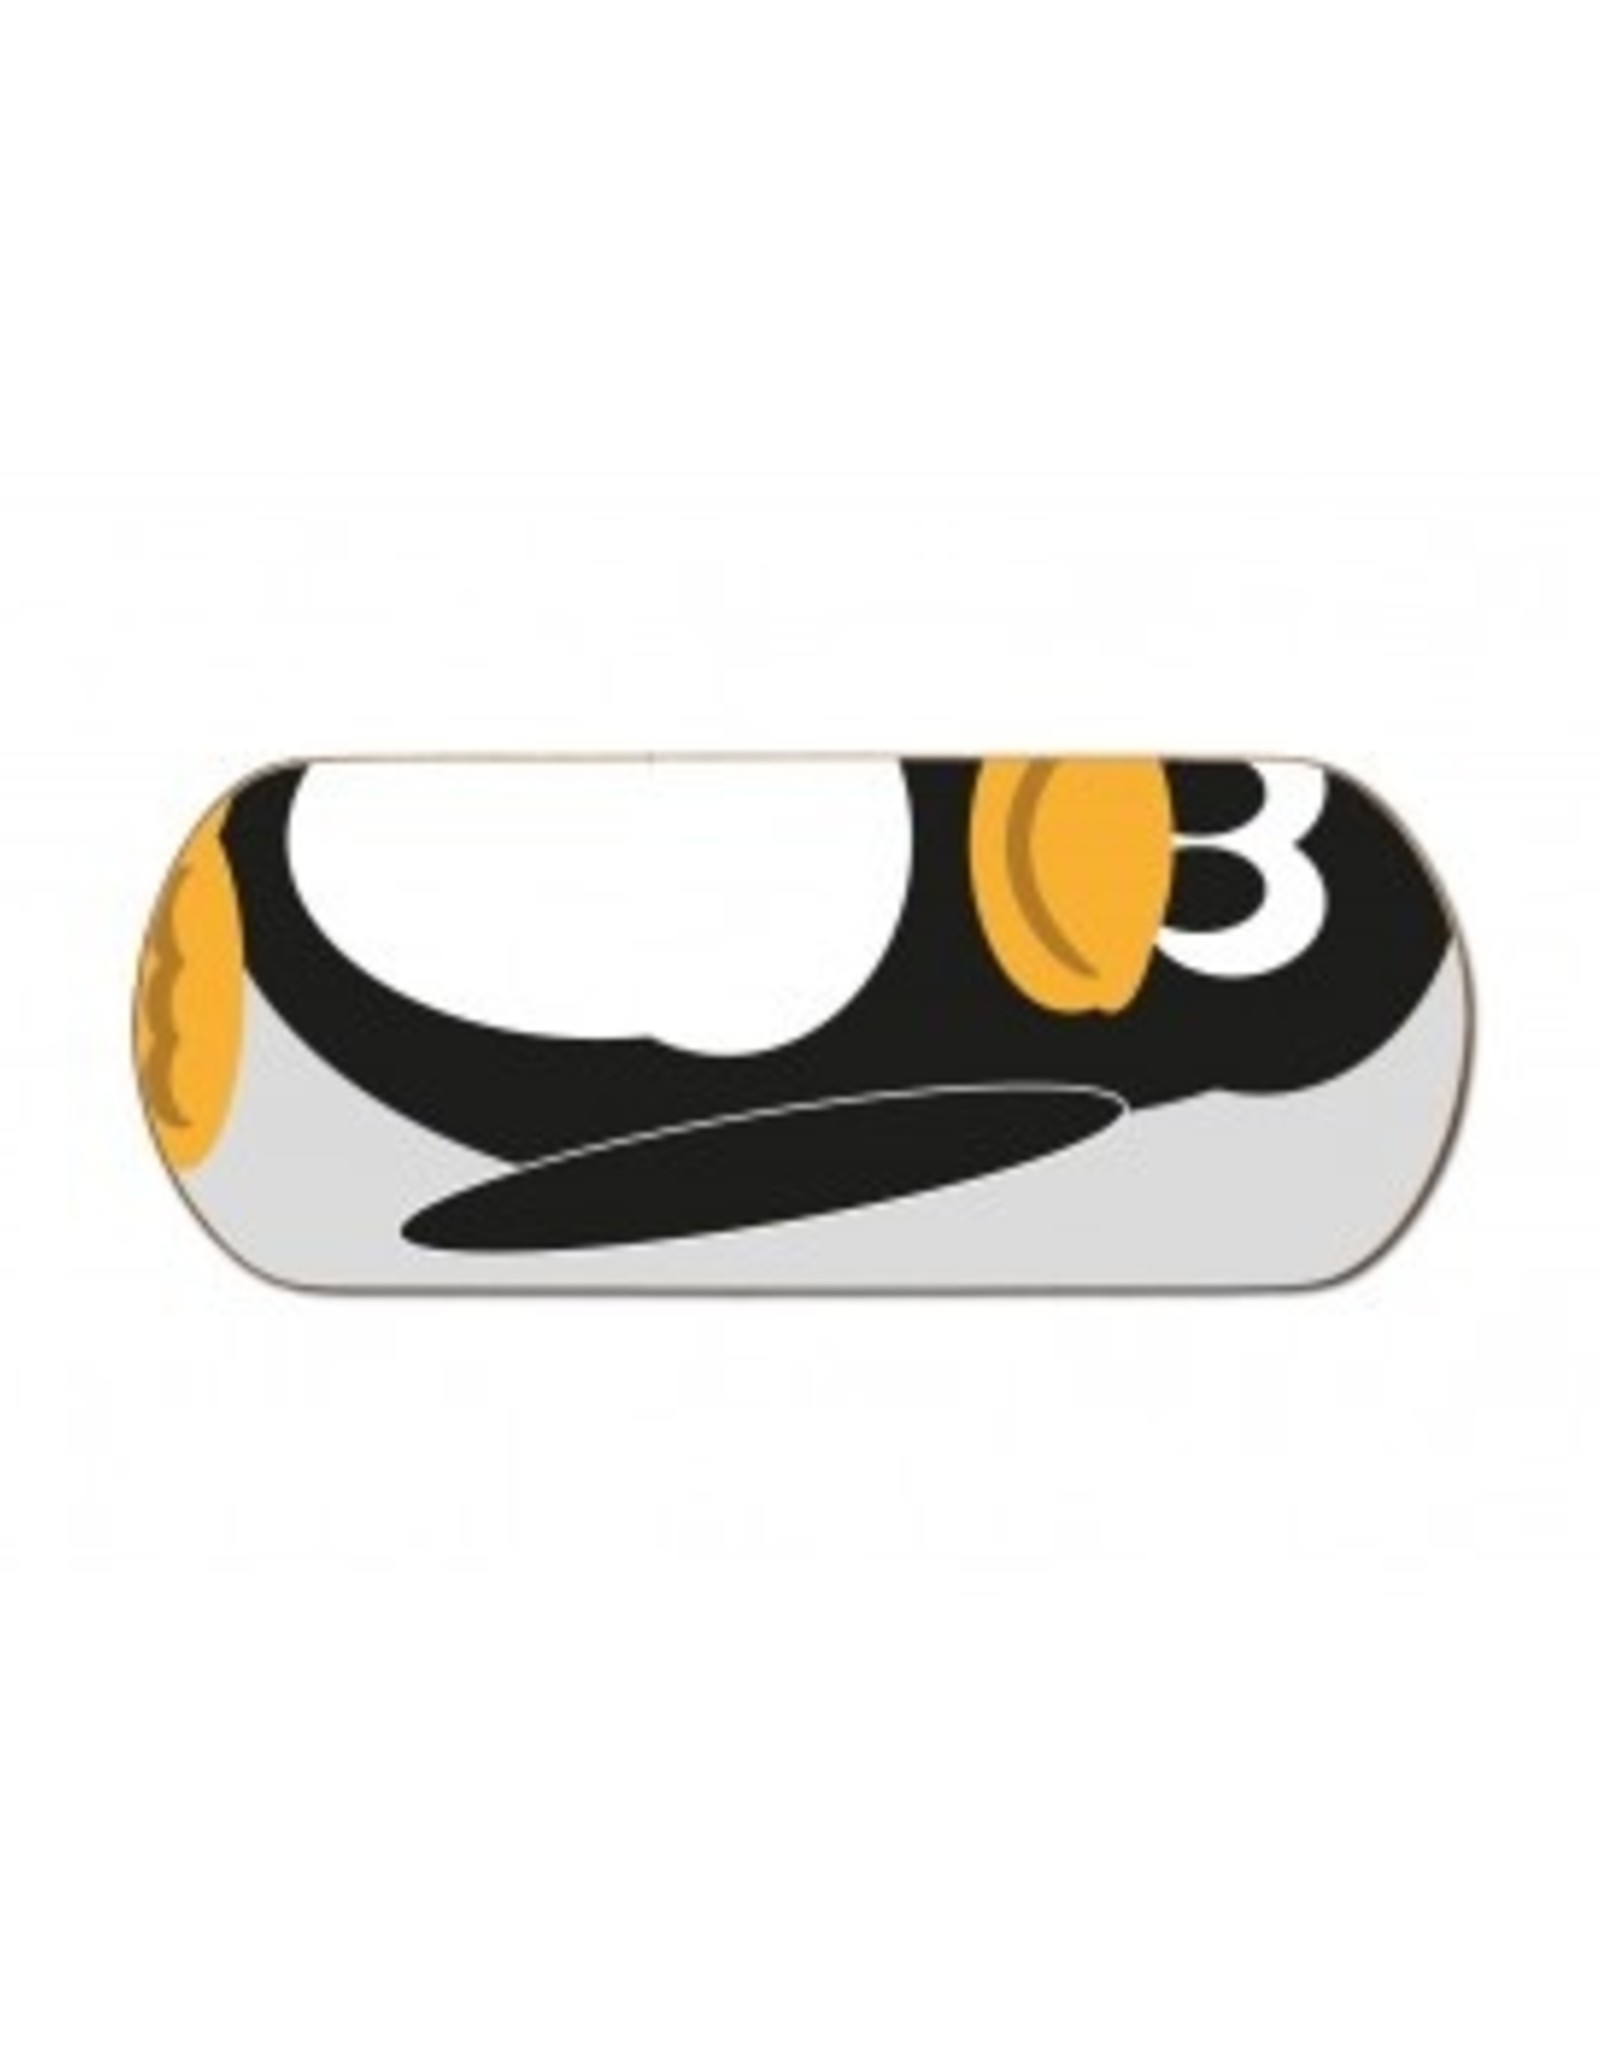 Daffy Boards "Pingu" Für Kinder - Balance Board